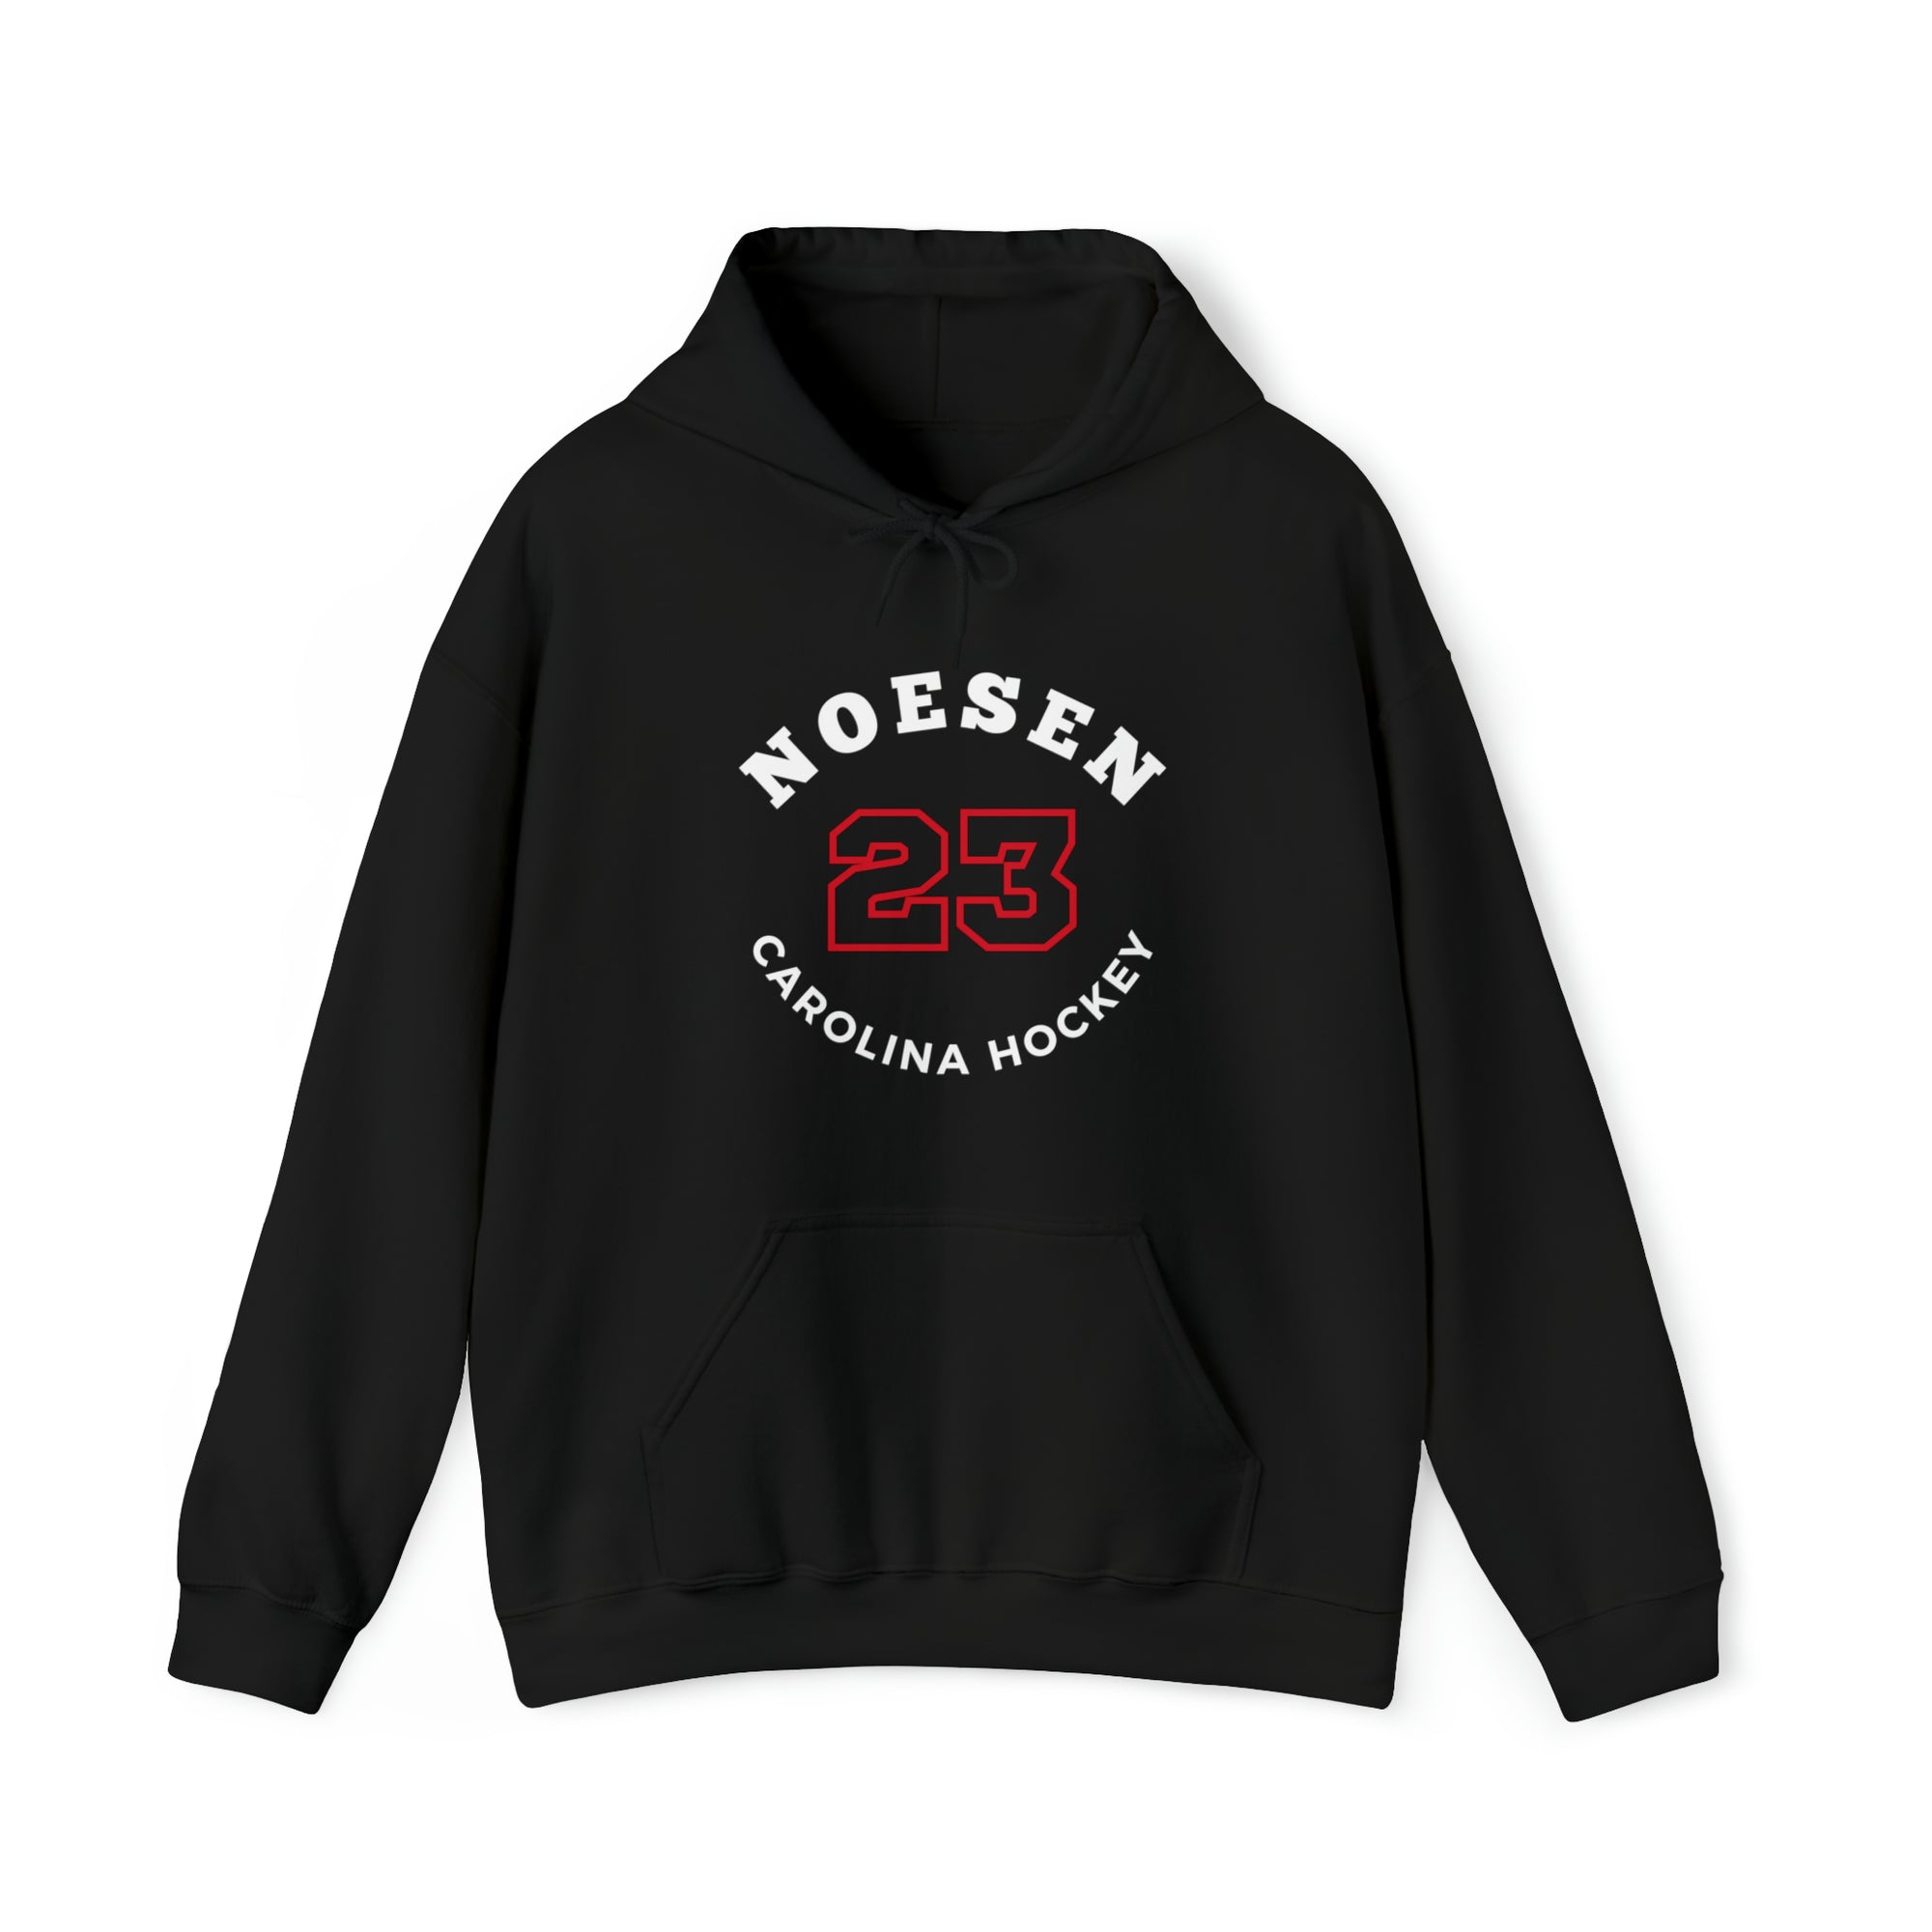 Noesen 23 Carolina Hockey Number Arch Design Unisex Hooded Sweatshirt